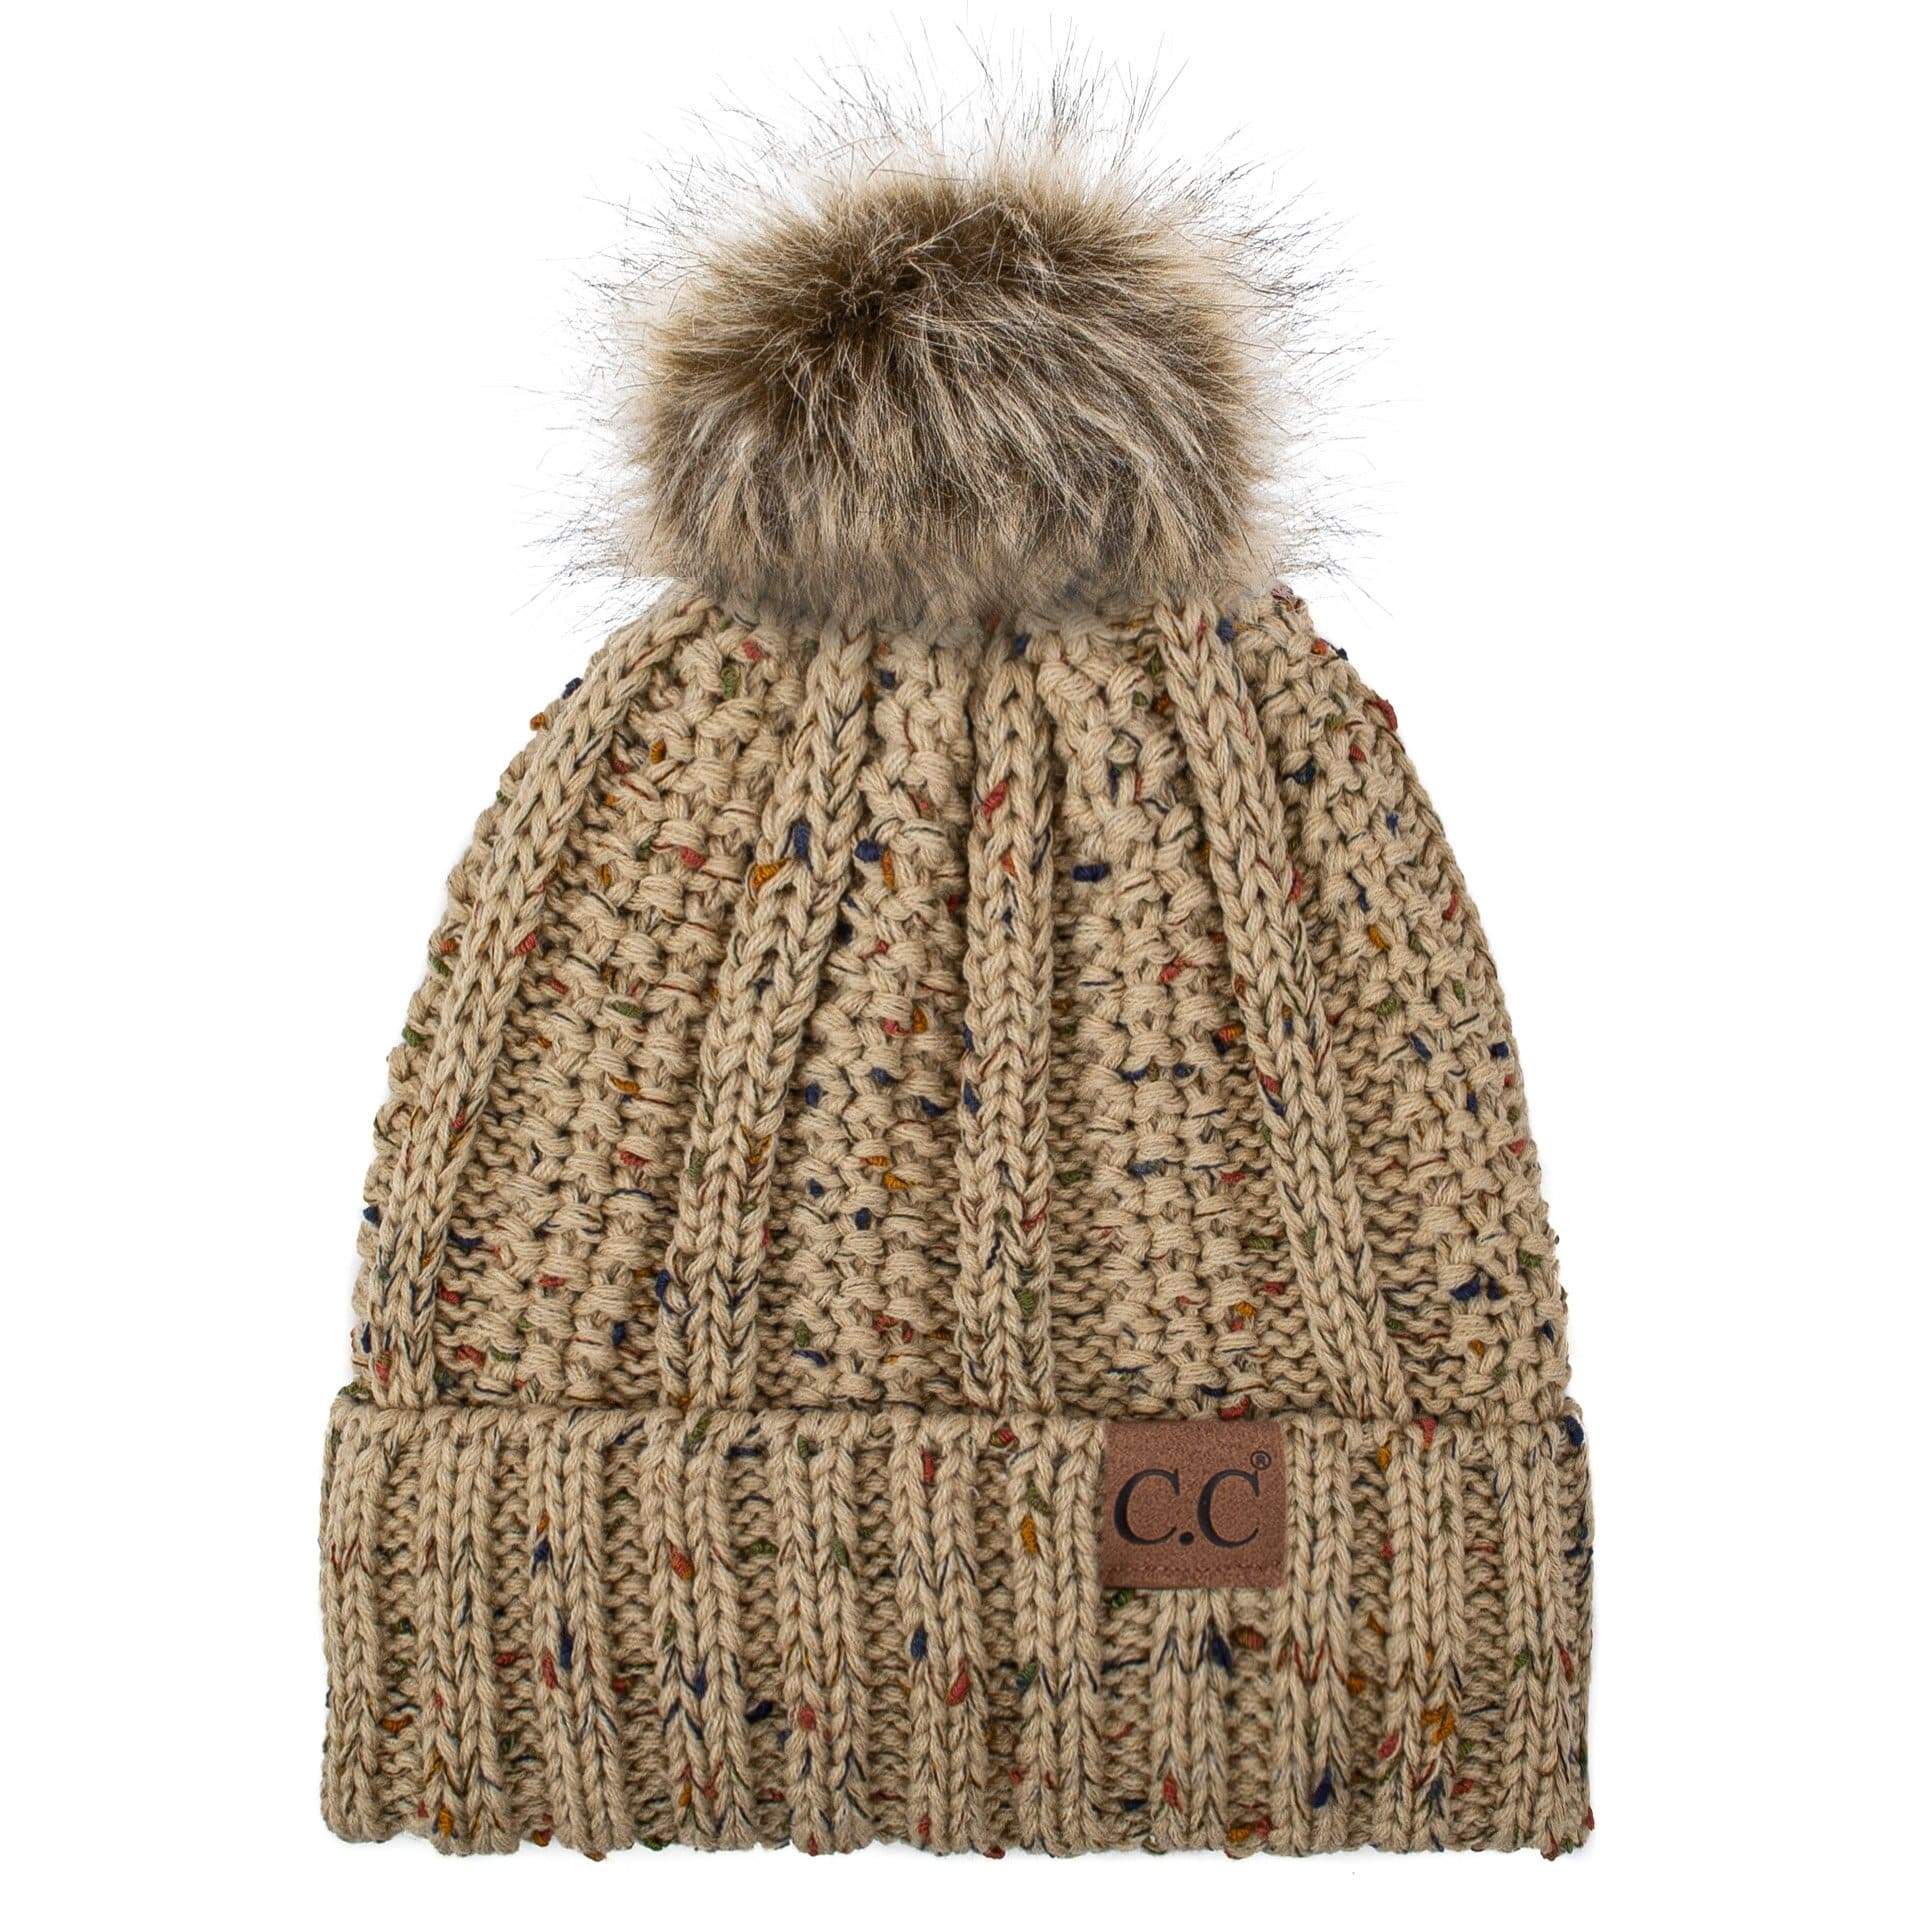 C.C Apparel C.C YJ820 - Thick Cable Knit Hat Faux Fur Pom Pom Fleece Lined Confetti Skull Cap Cuff Beanie